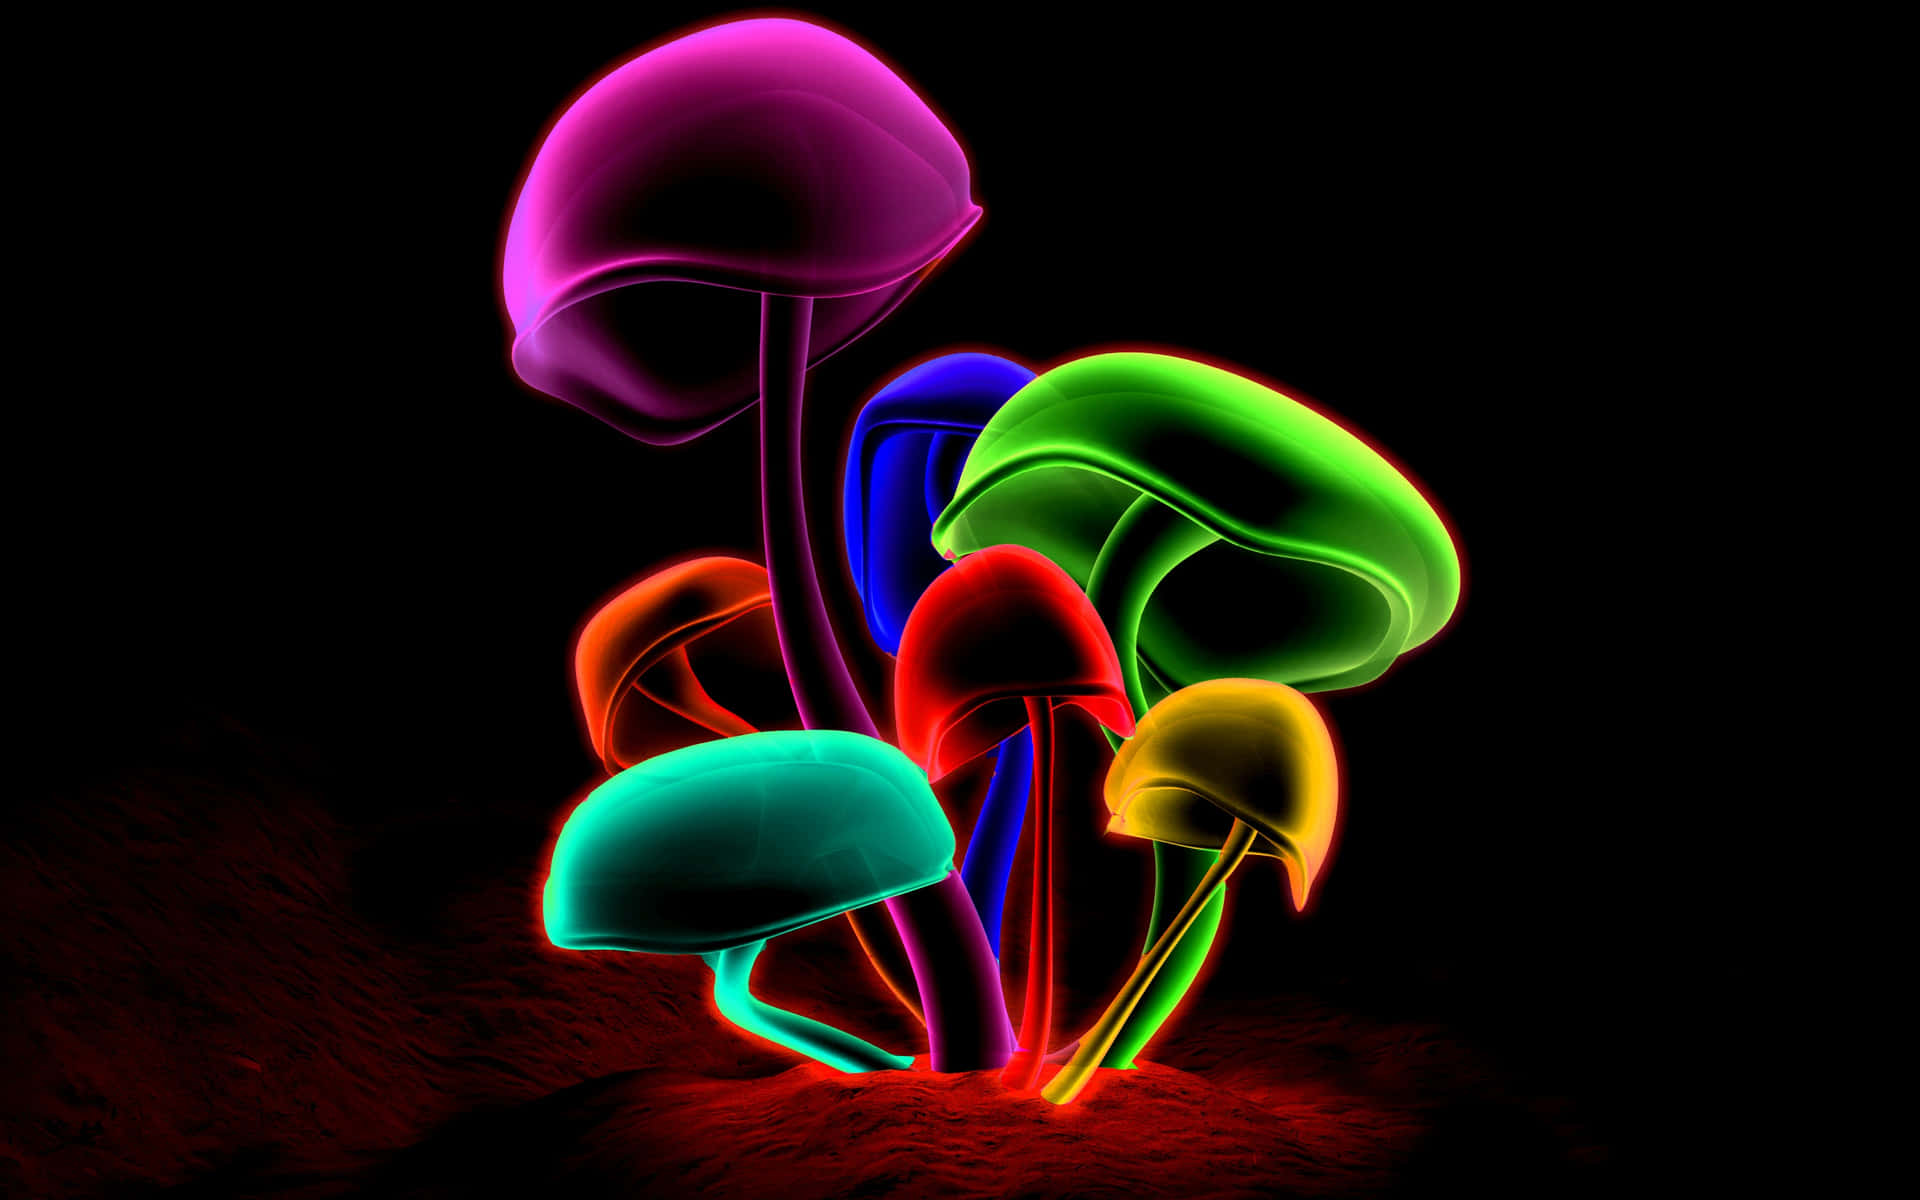 A Colorful Mushroom In The Dark Wallpaper